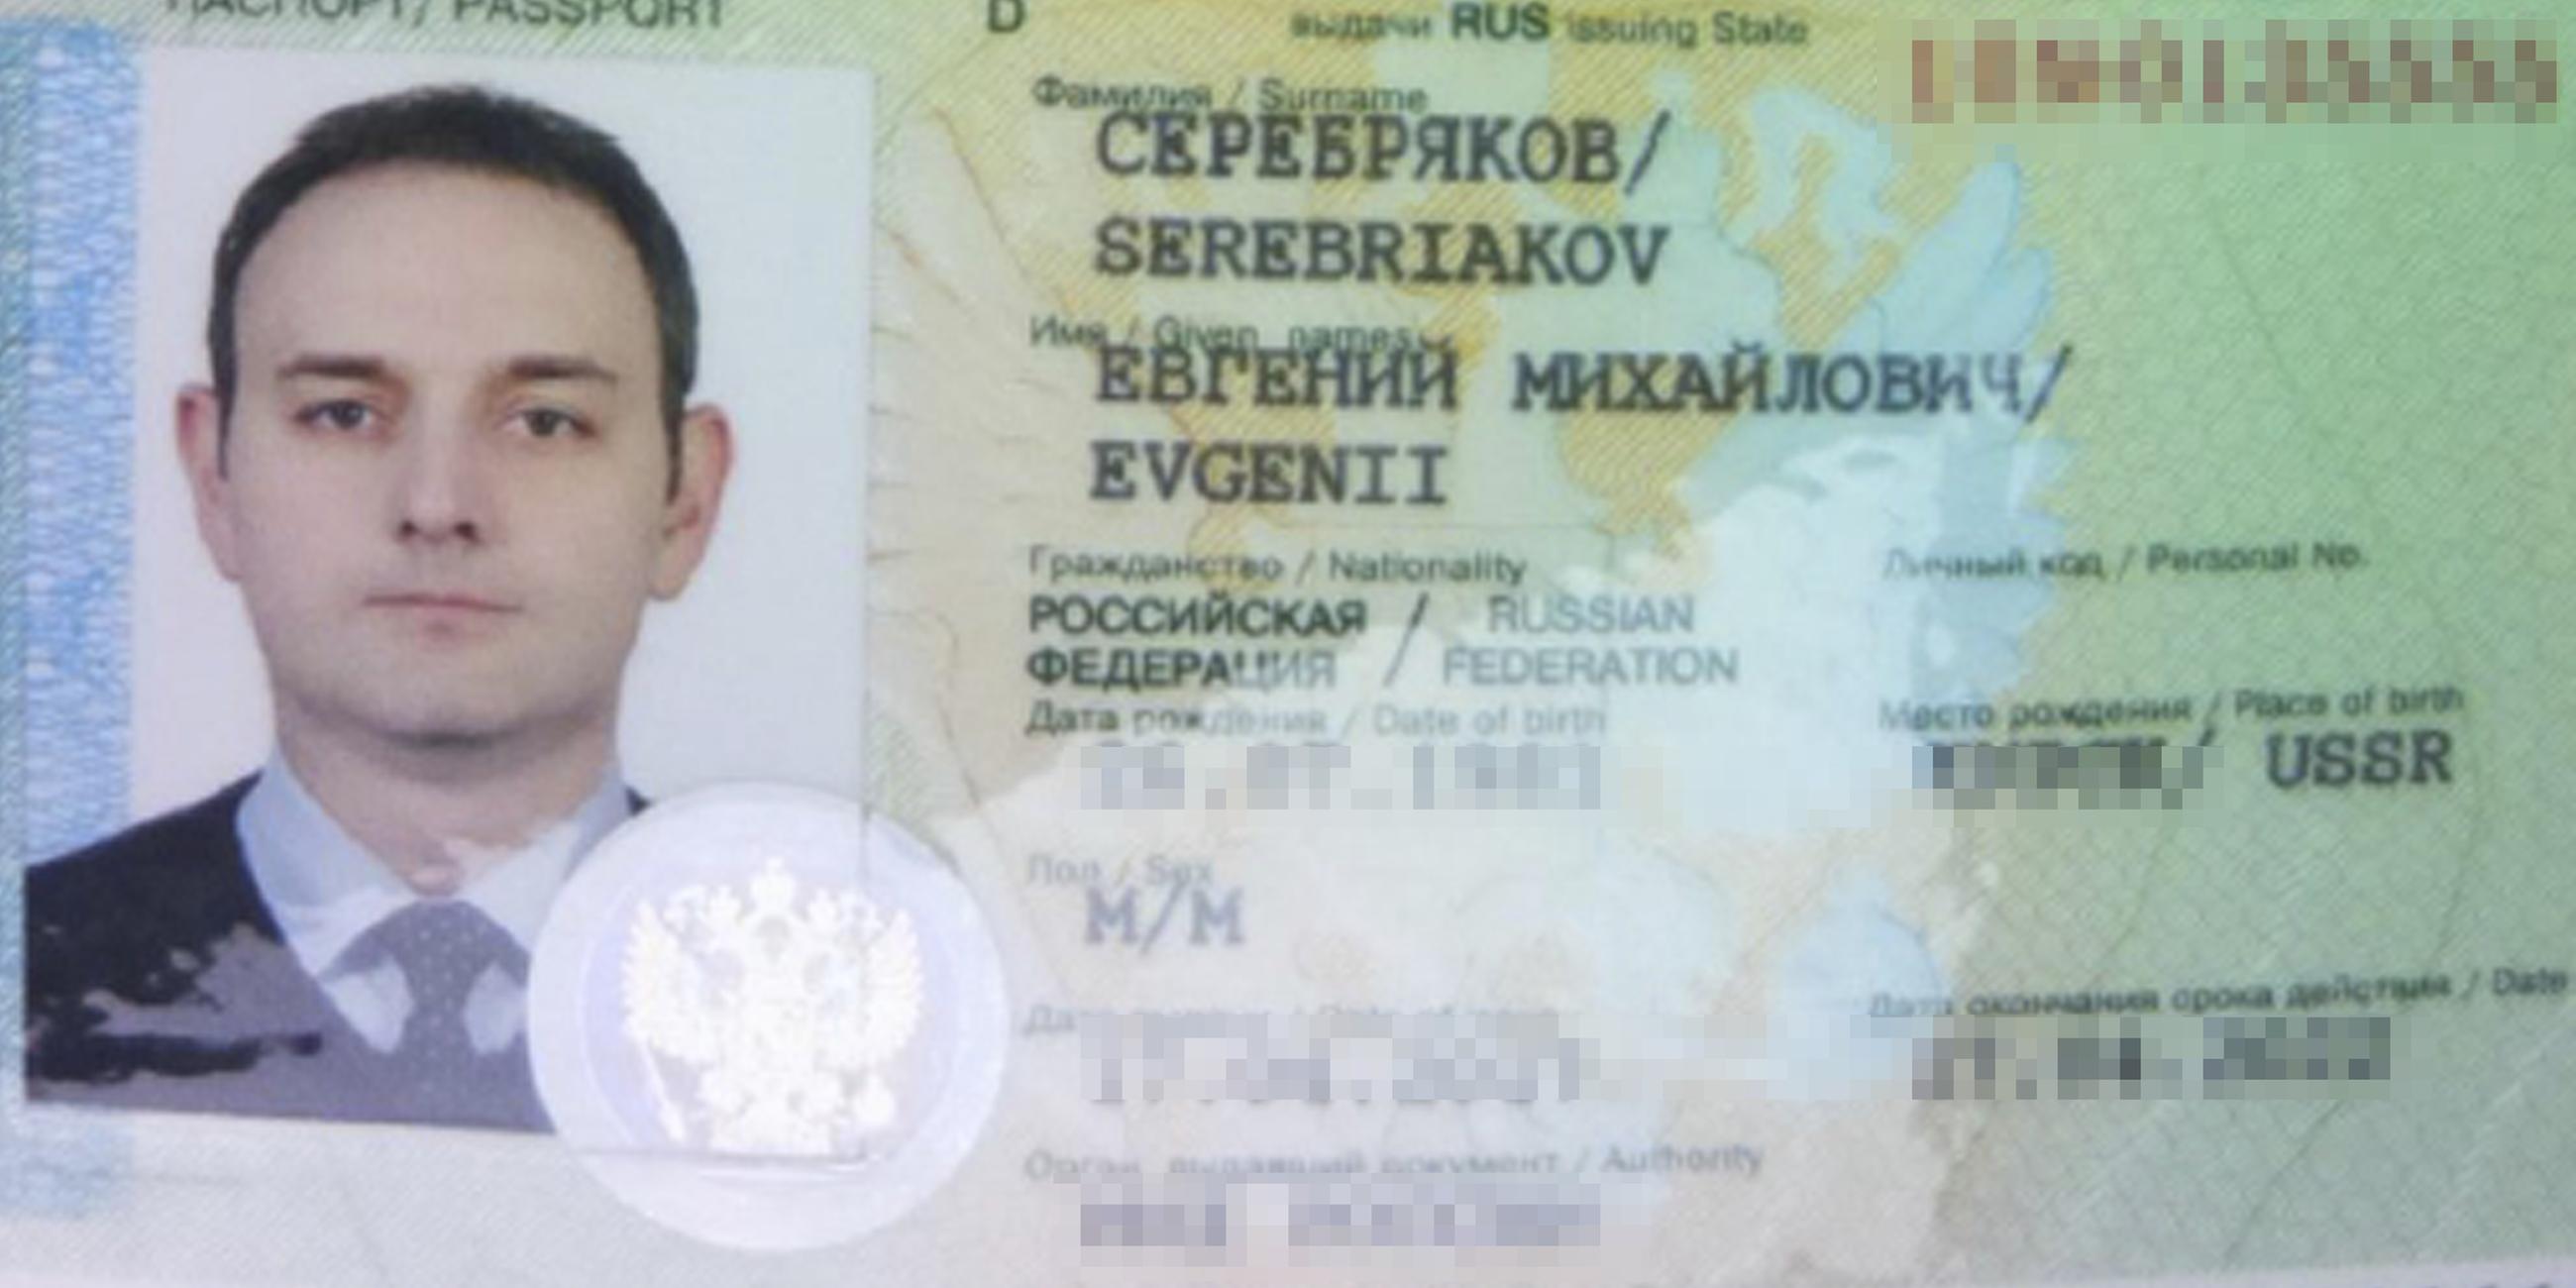 Pass von Evgenii Serebriakov